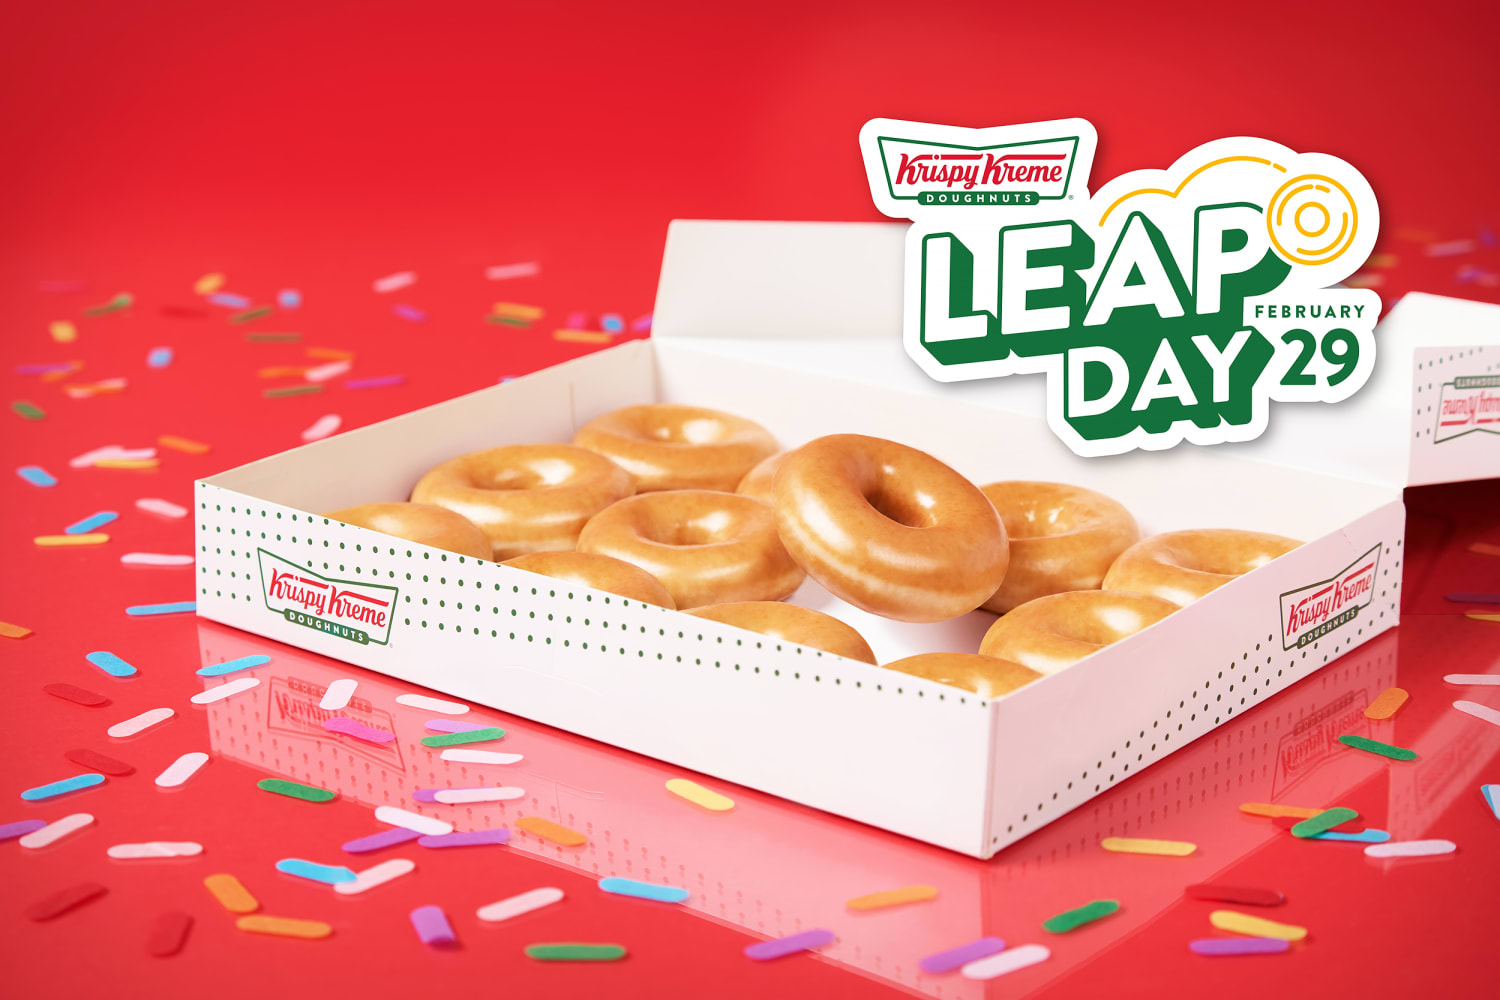 Krispy Kreme's sweet leap day deal: A dozen doughnuts for $2.29